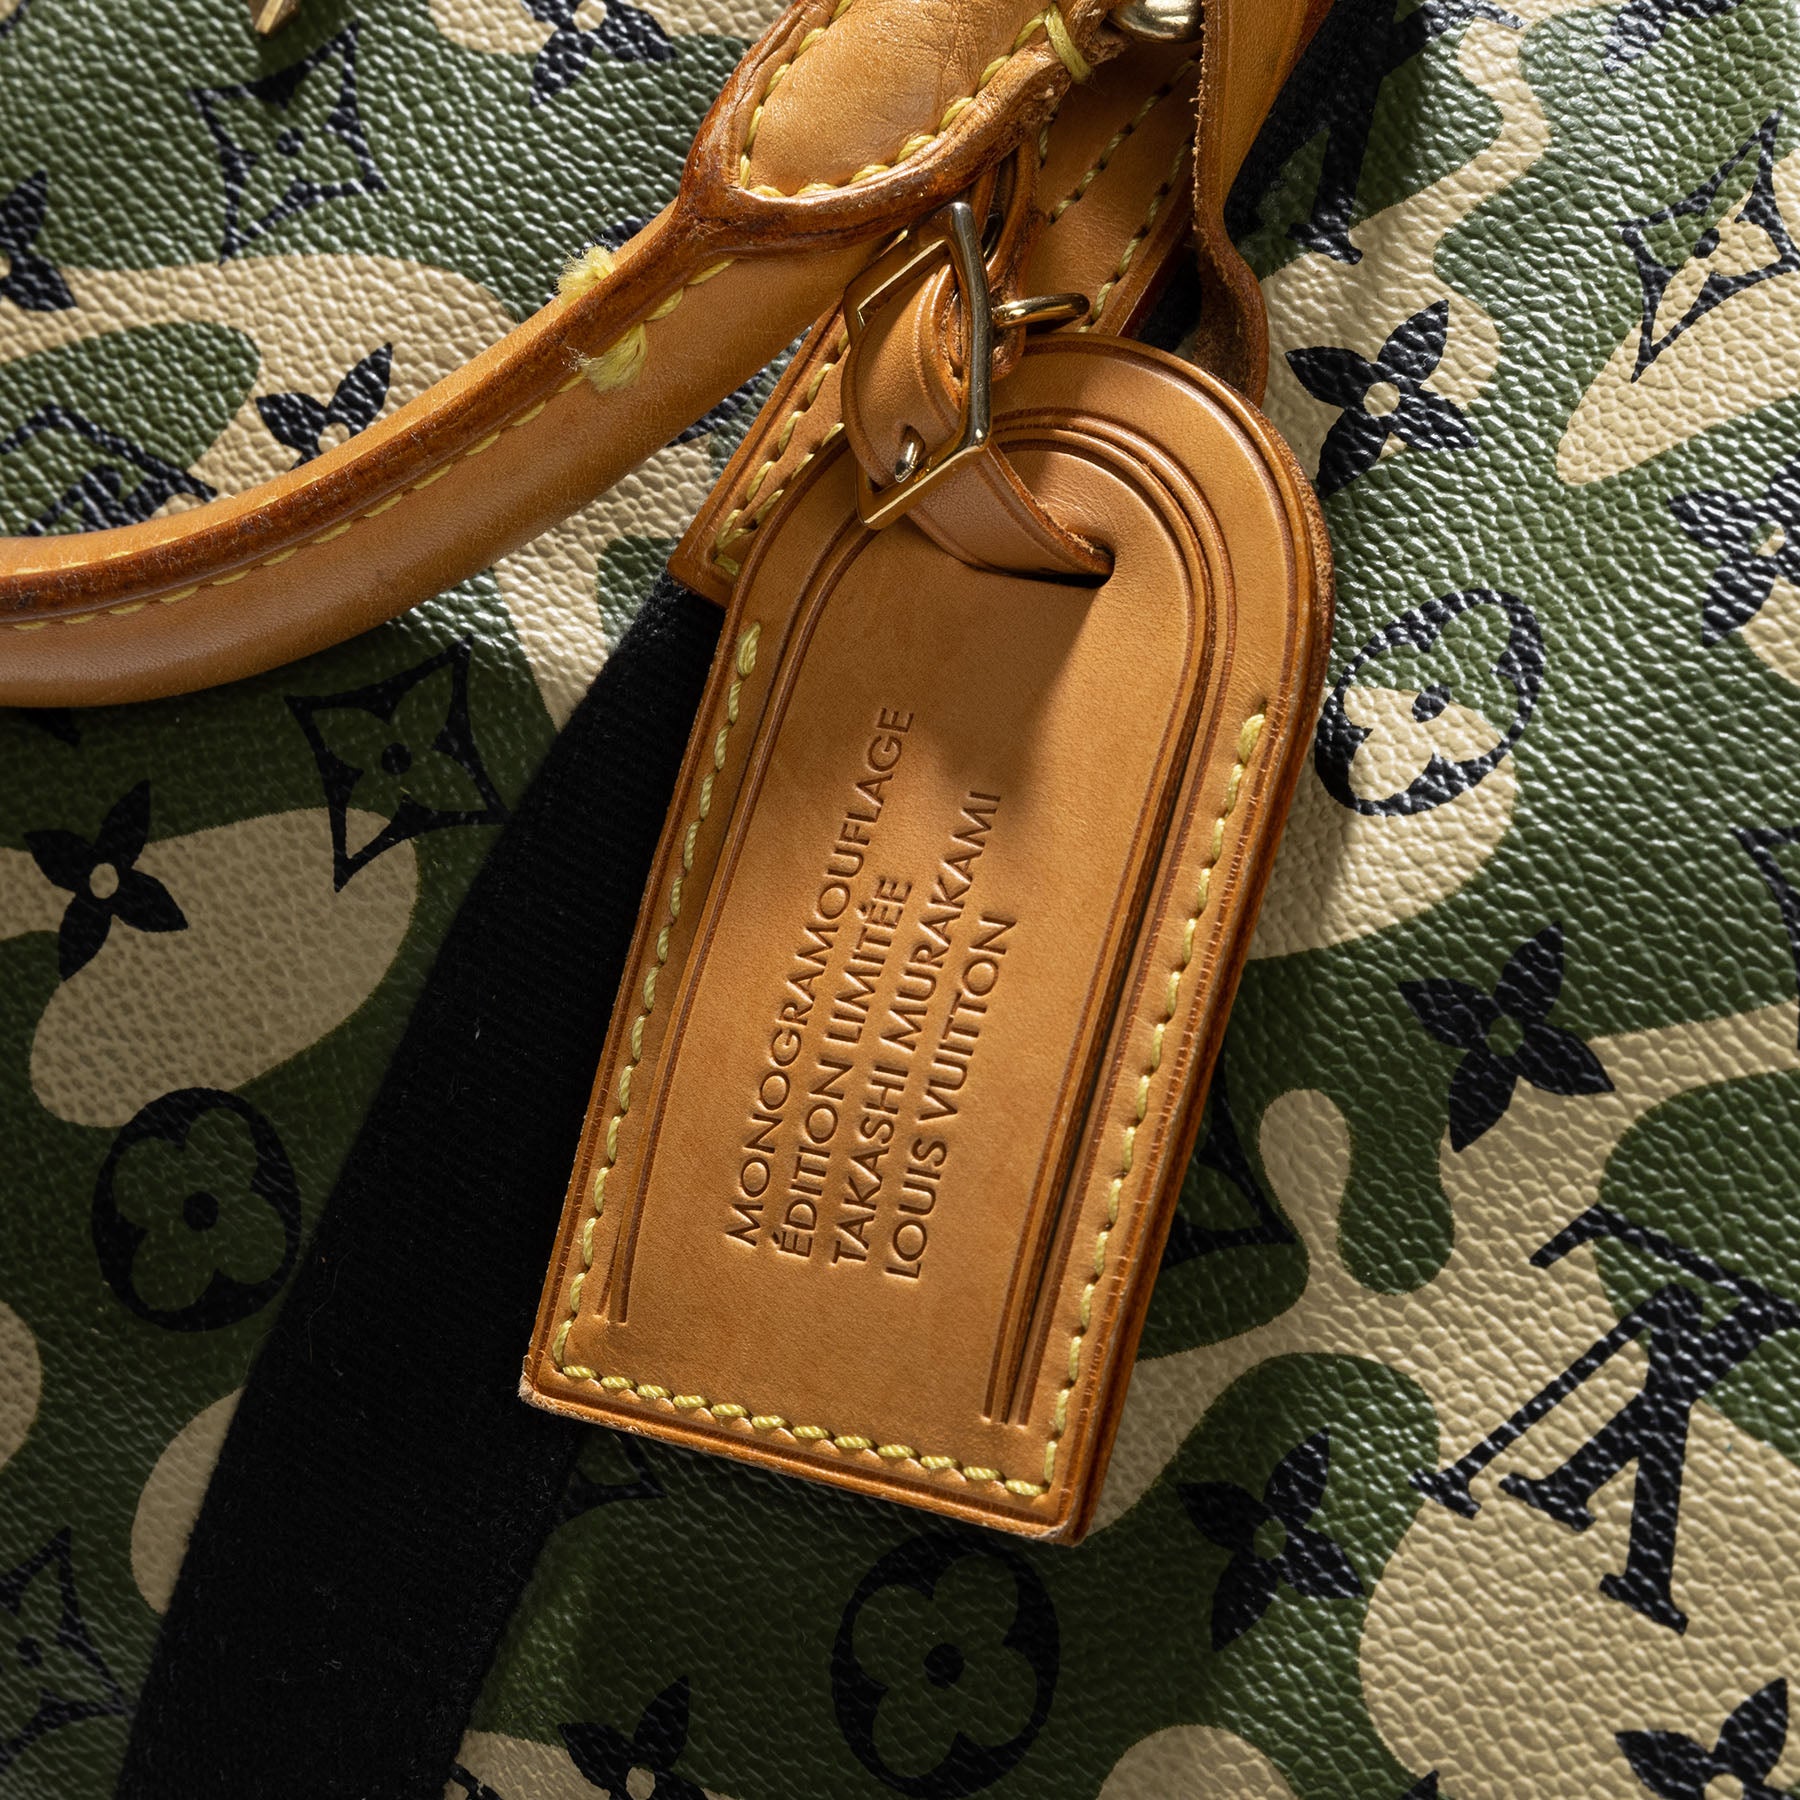 55 inch lv purse chain gold